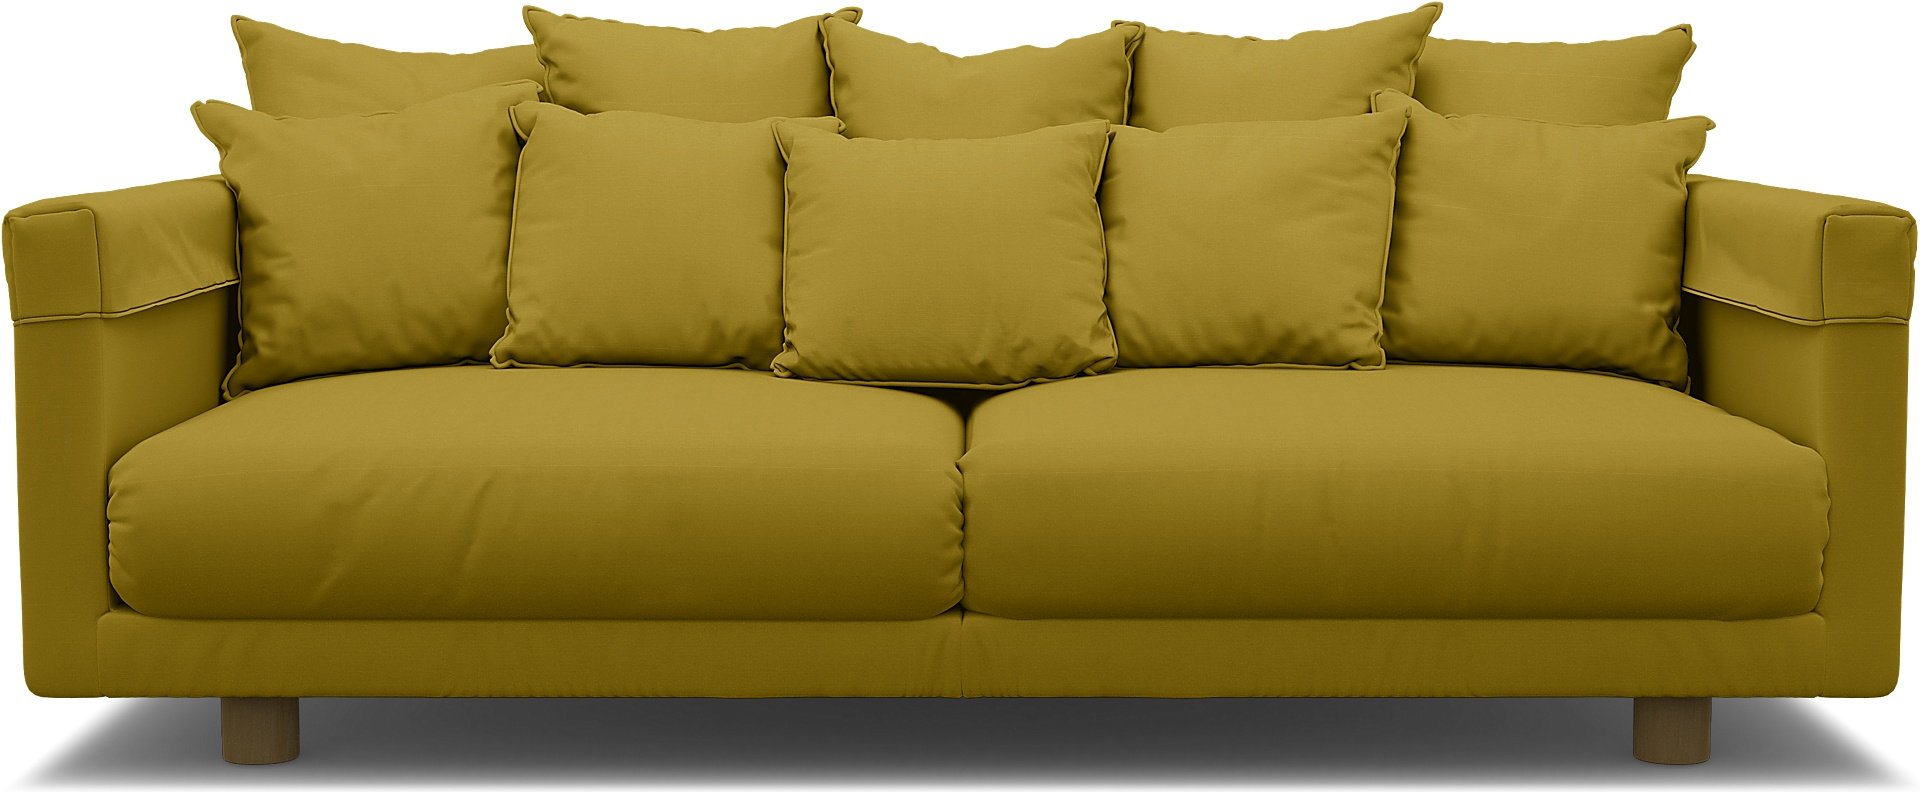 IKEA - Stockholm 2017 3 Seater Sofa Cover, Olive Oil, Cotton - Bemz